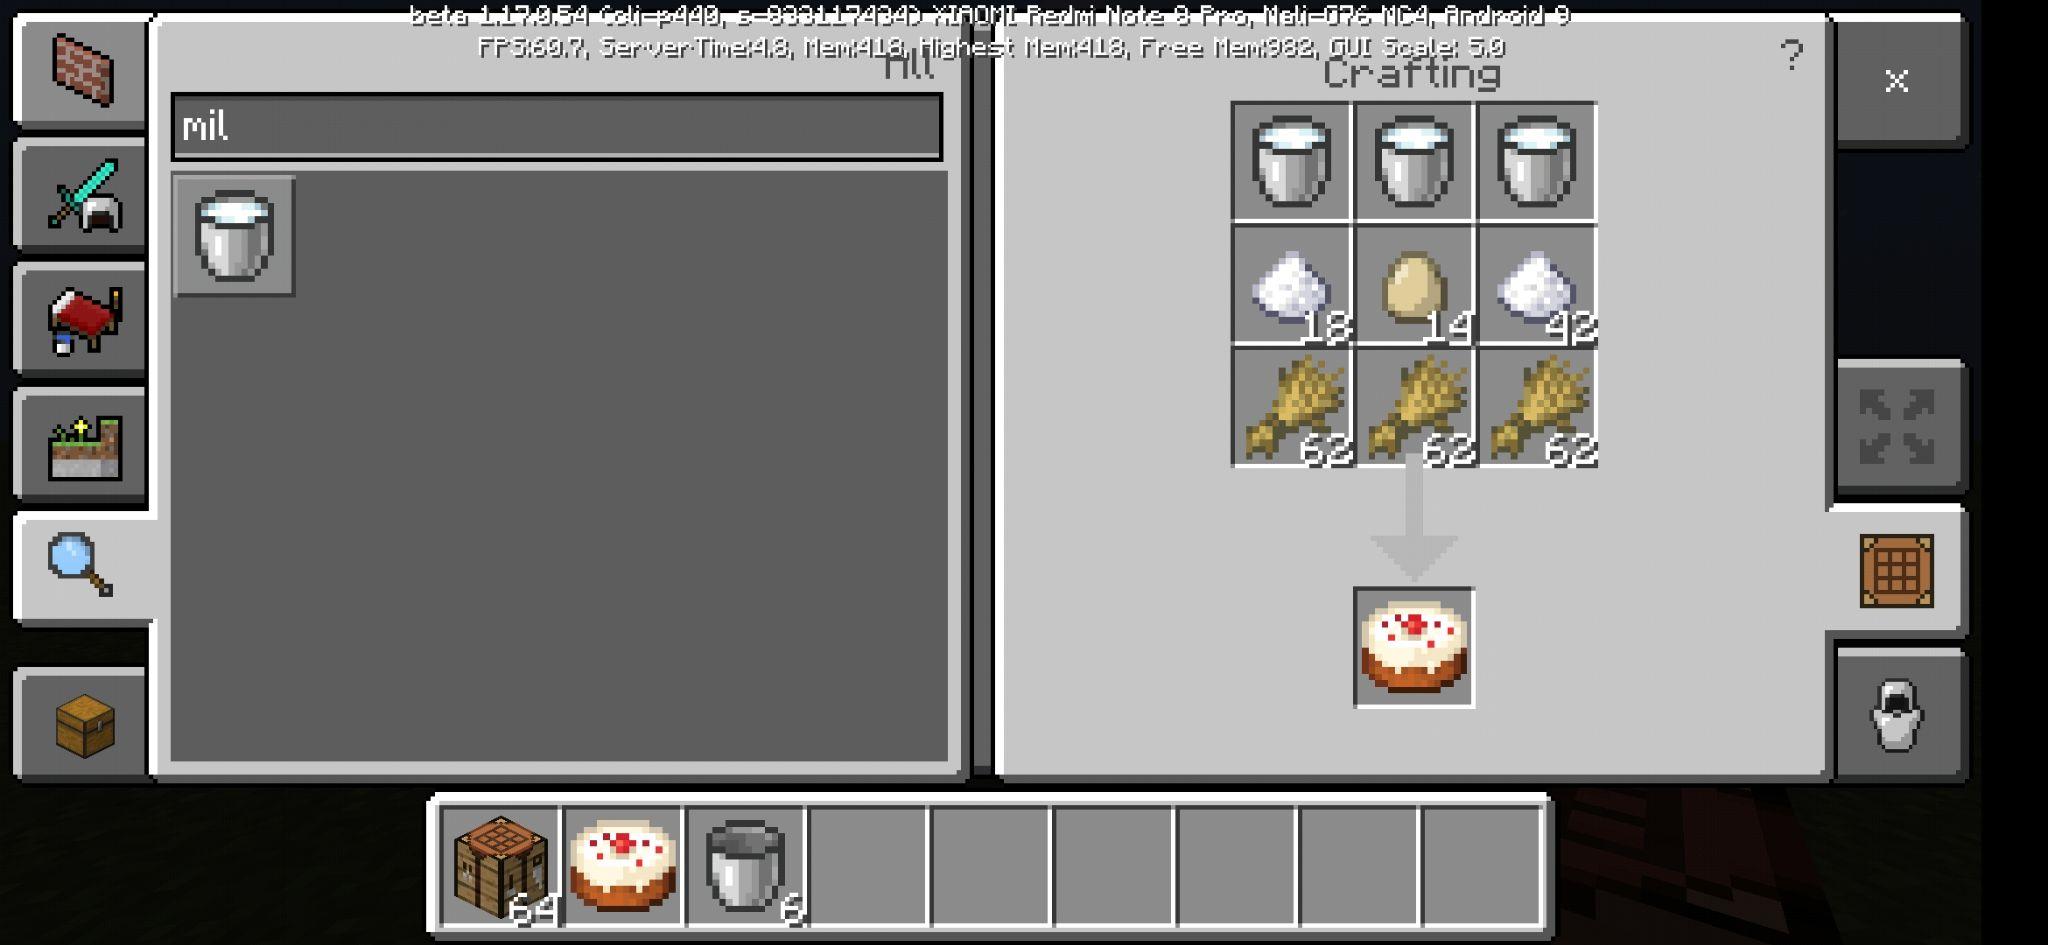 minecraft recipes cake